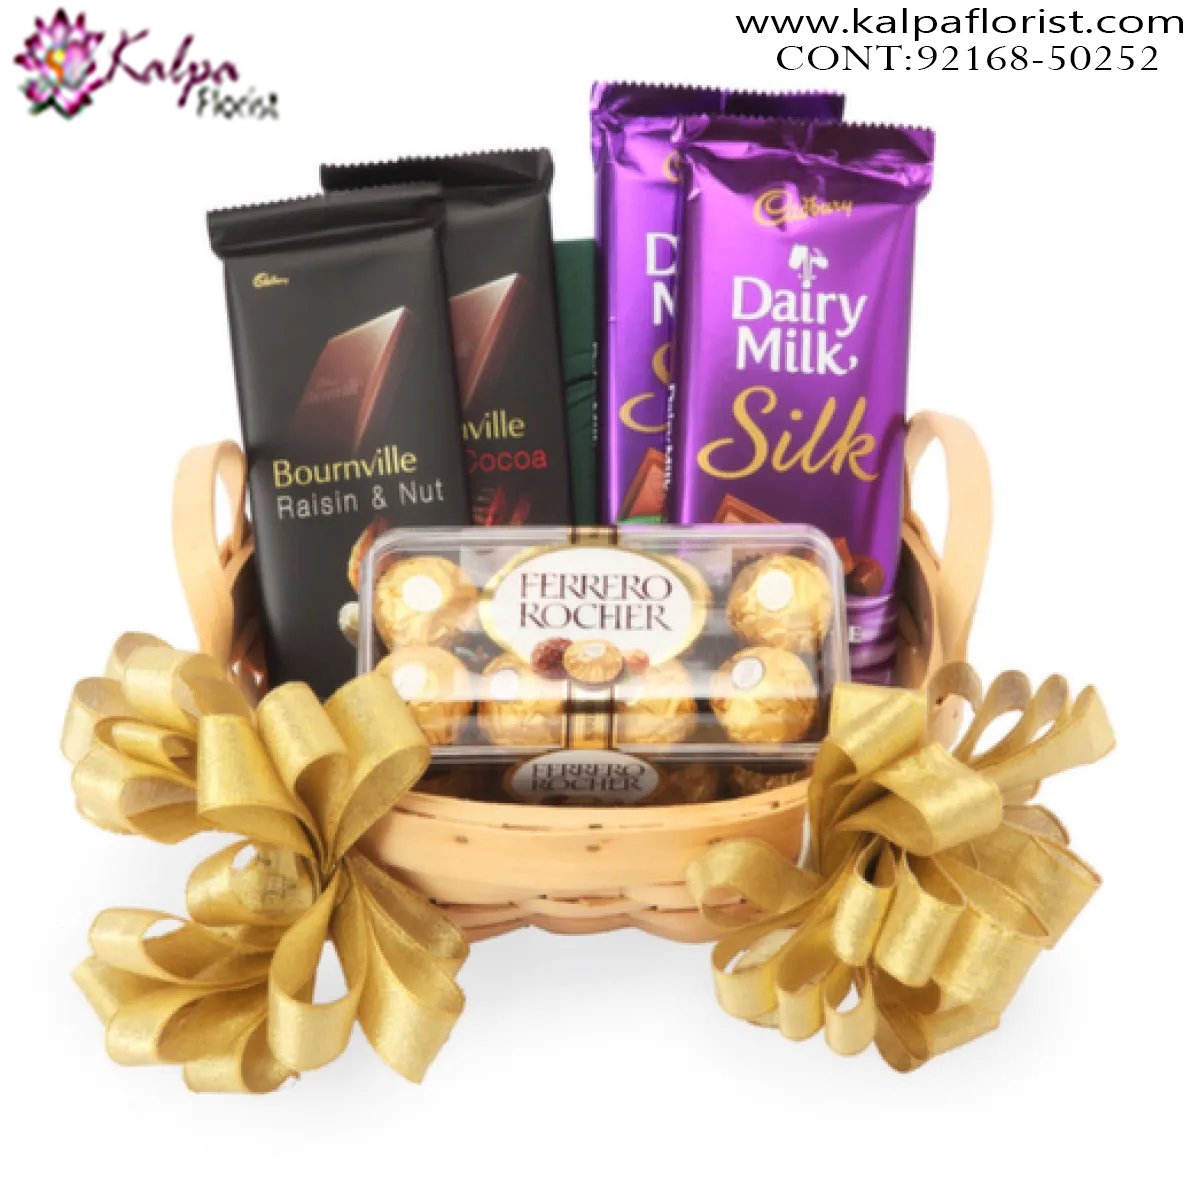 Gift Hamper Online Delivery to Madagascar  Ferrero Rocher Chocolate